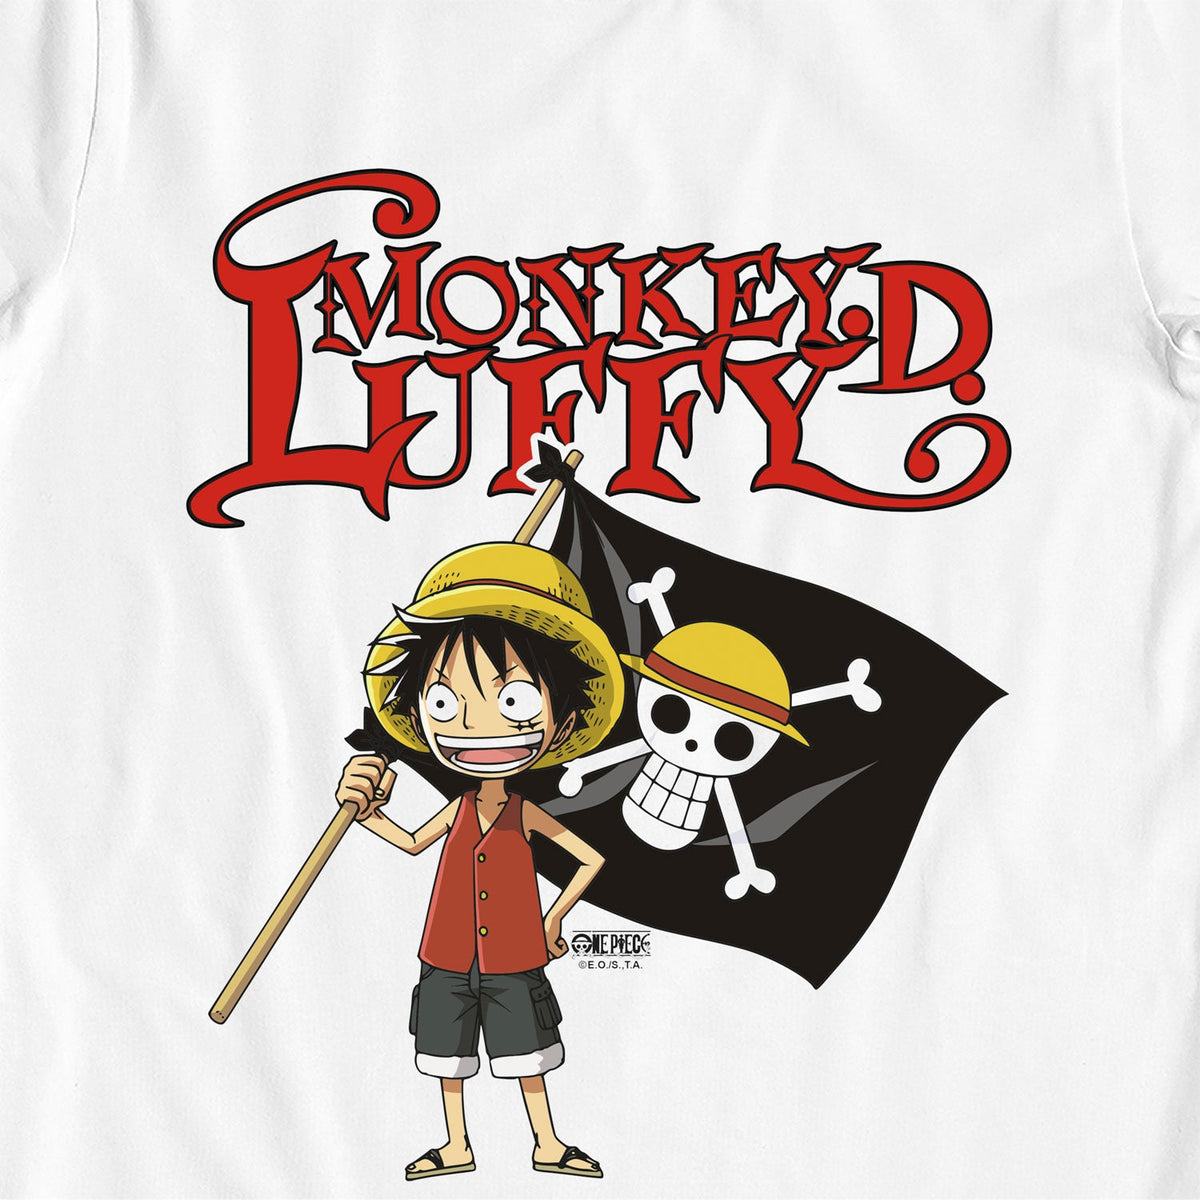 One Piece Monkey D Luffy Flag White Kids T-Shirt